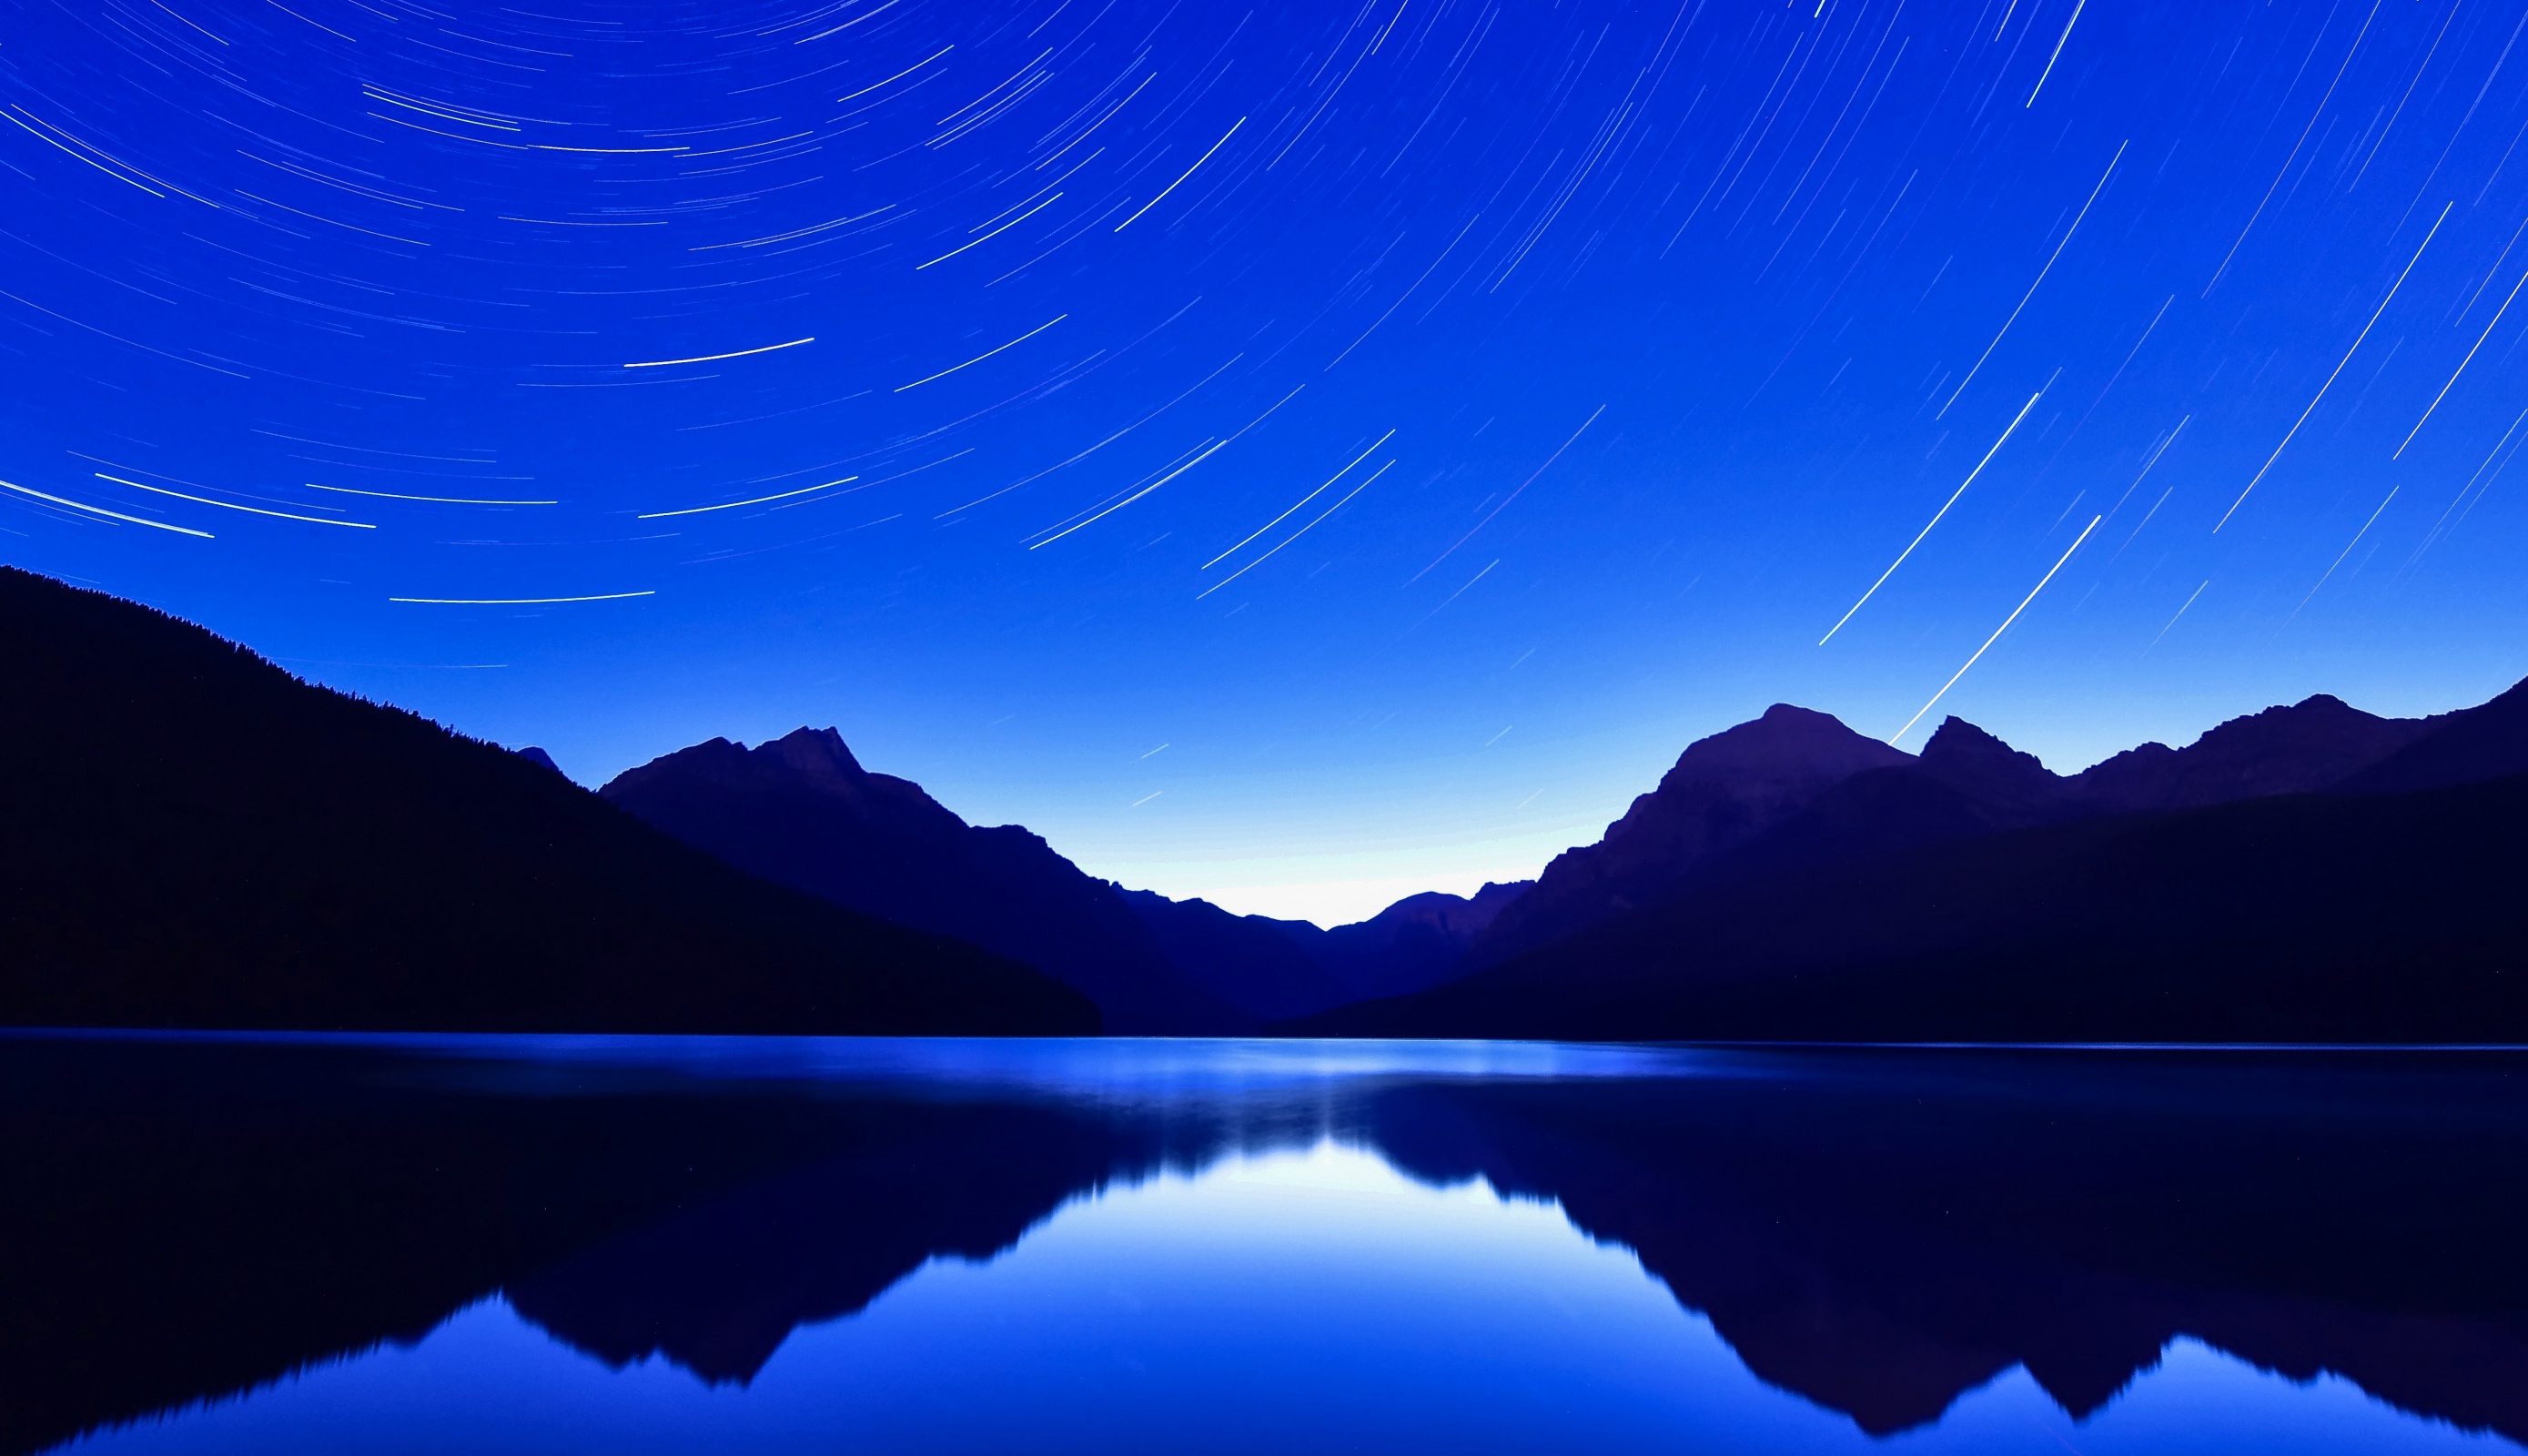 earth, star trail, blue, lake, mountain, nature, night, reflection, stars